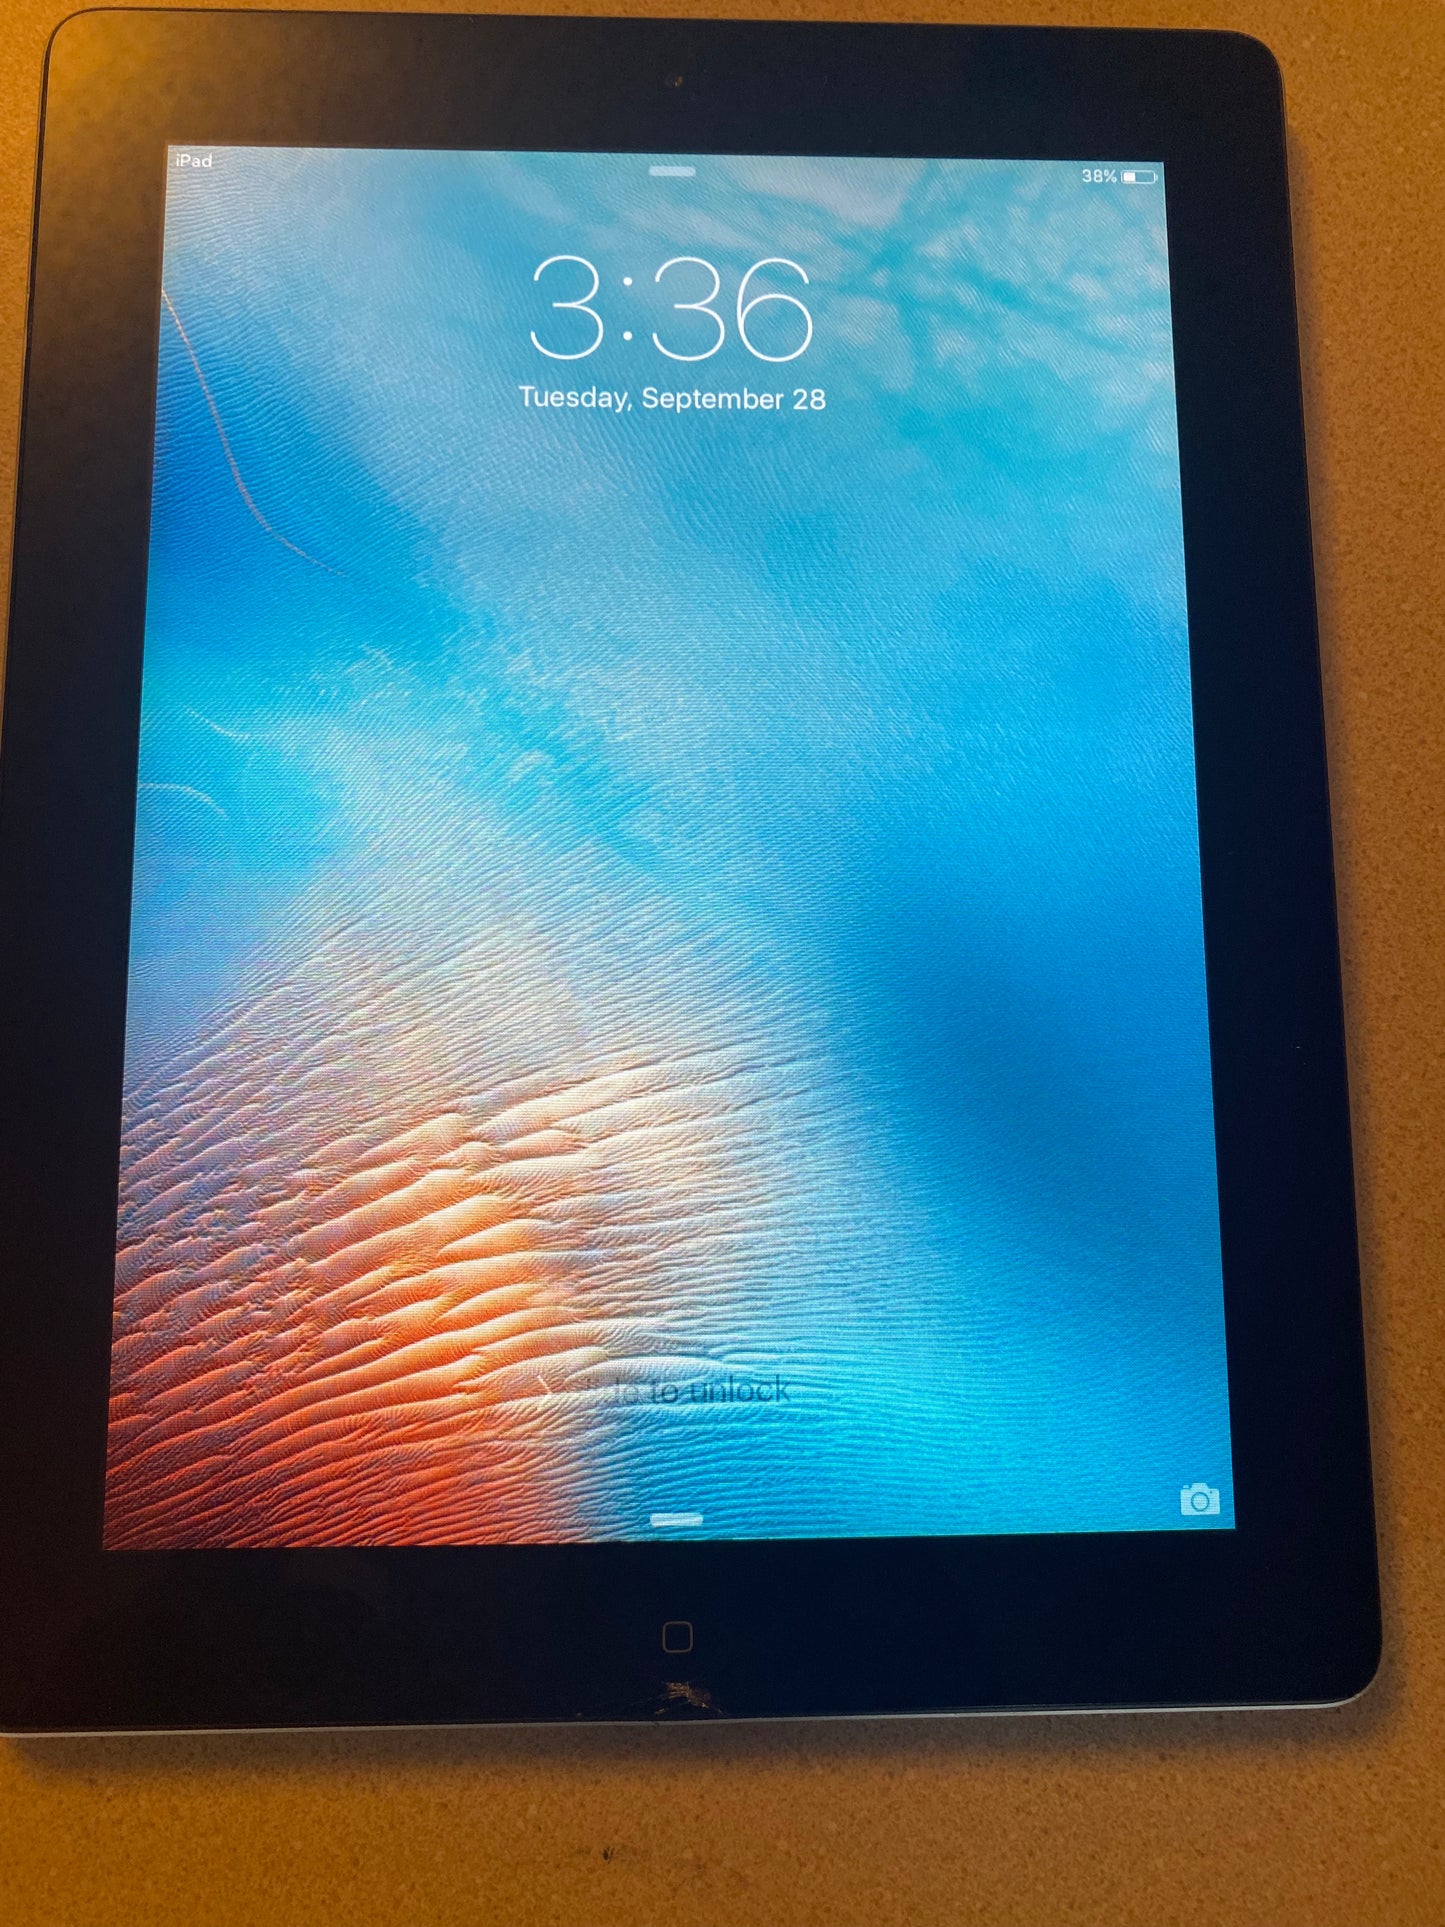 Apple iPad 2 A1395 16GB, Wi-Fi (Unlocked), 9.7in Black Nice Condition MC769LL/A